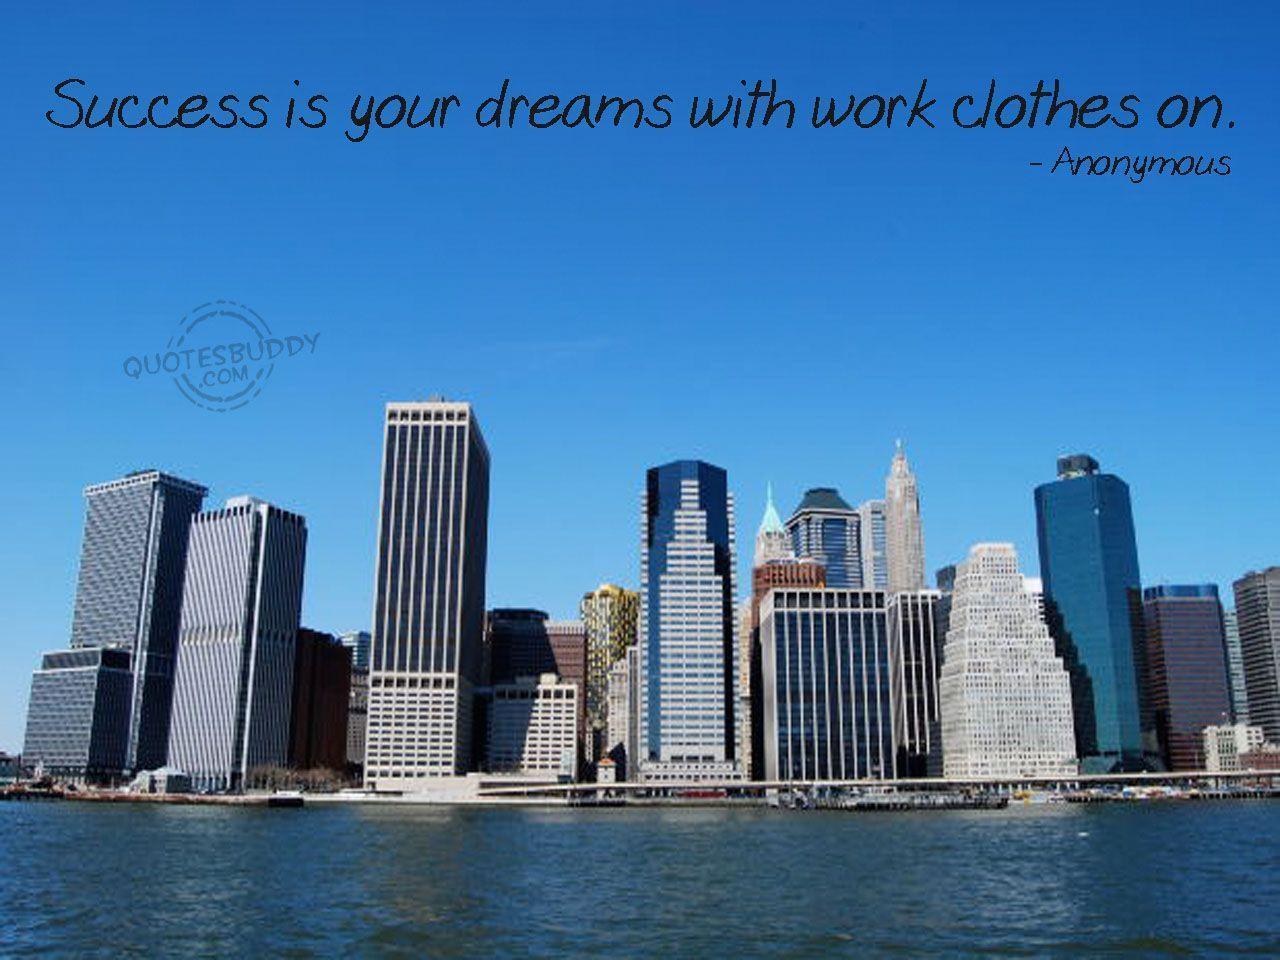 Motivational Wallpaper on Success: Success is your dreams